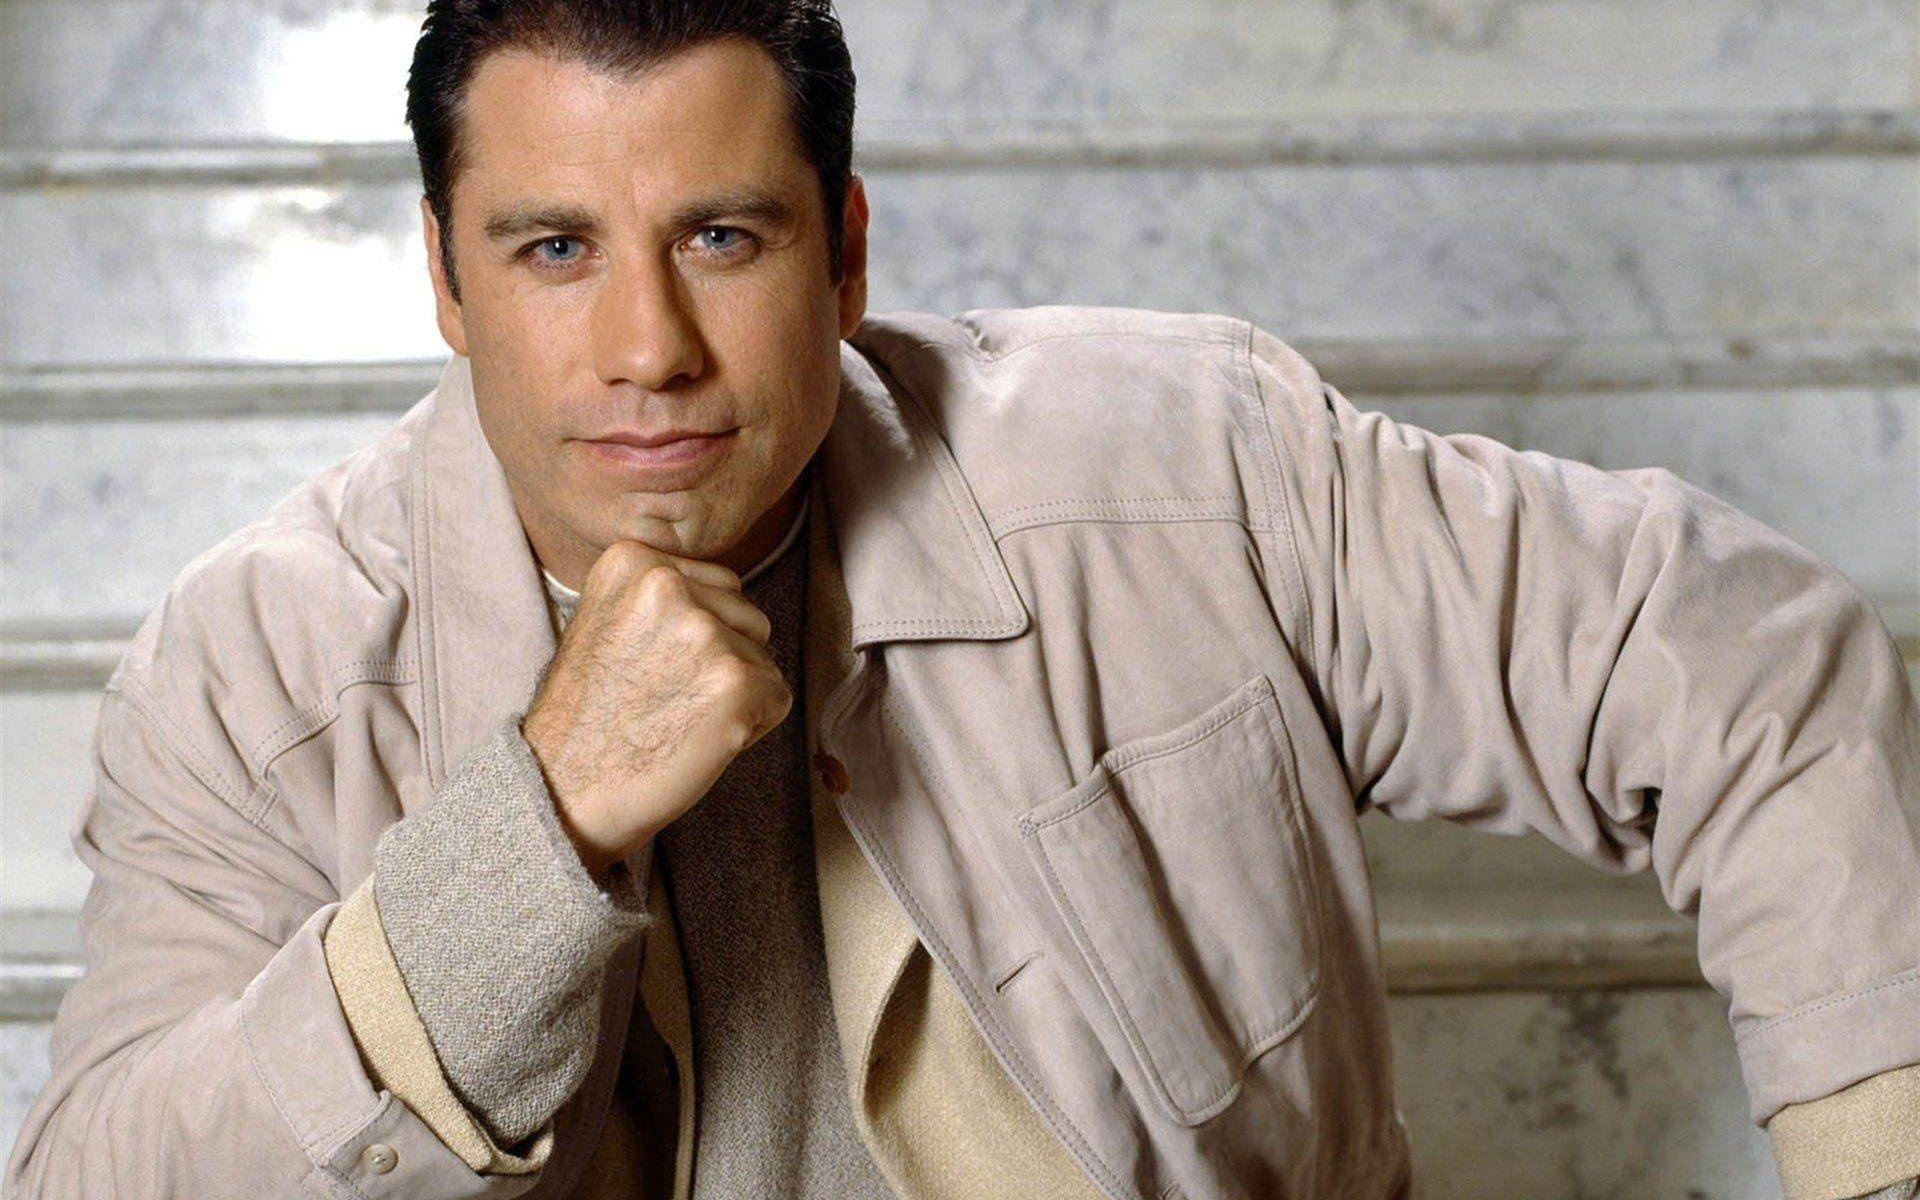 Saturday Night Fever: Travolta's White Disco Suit » BAMF Style